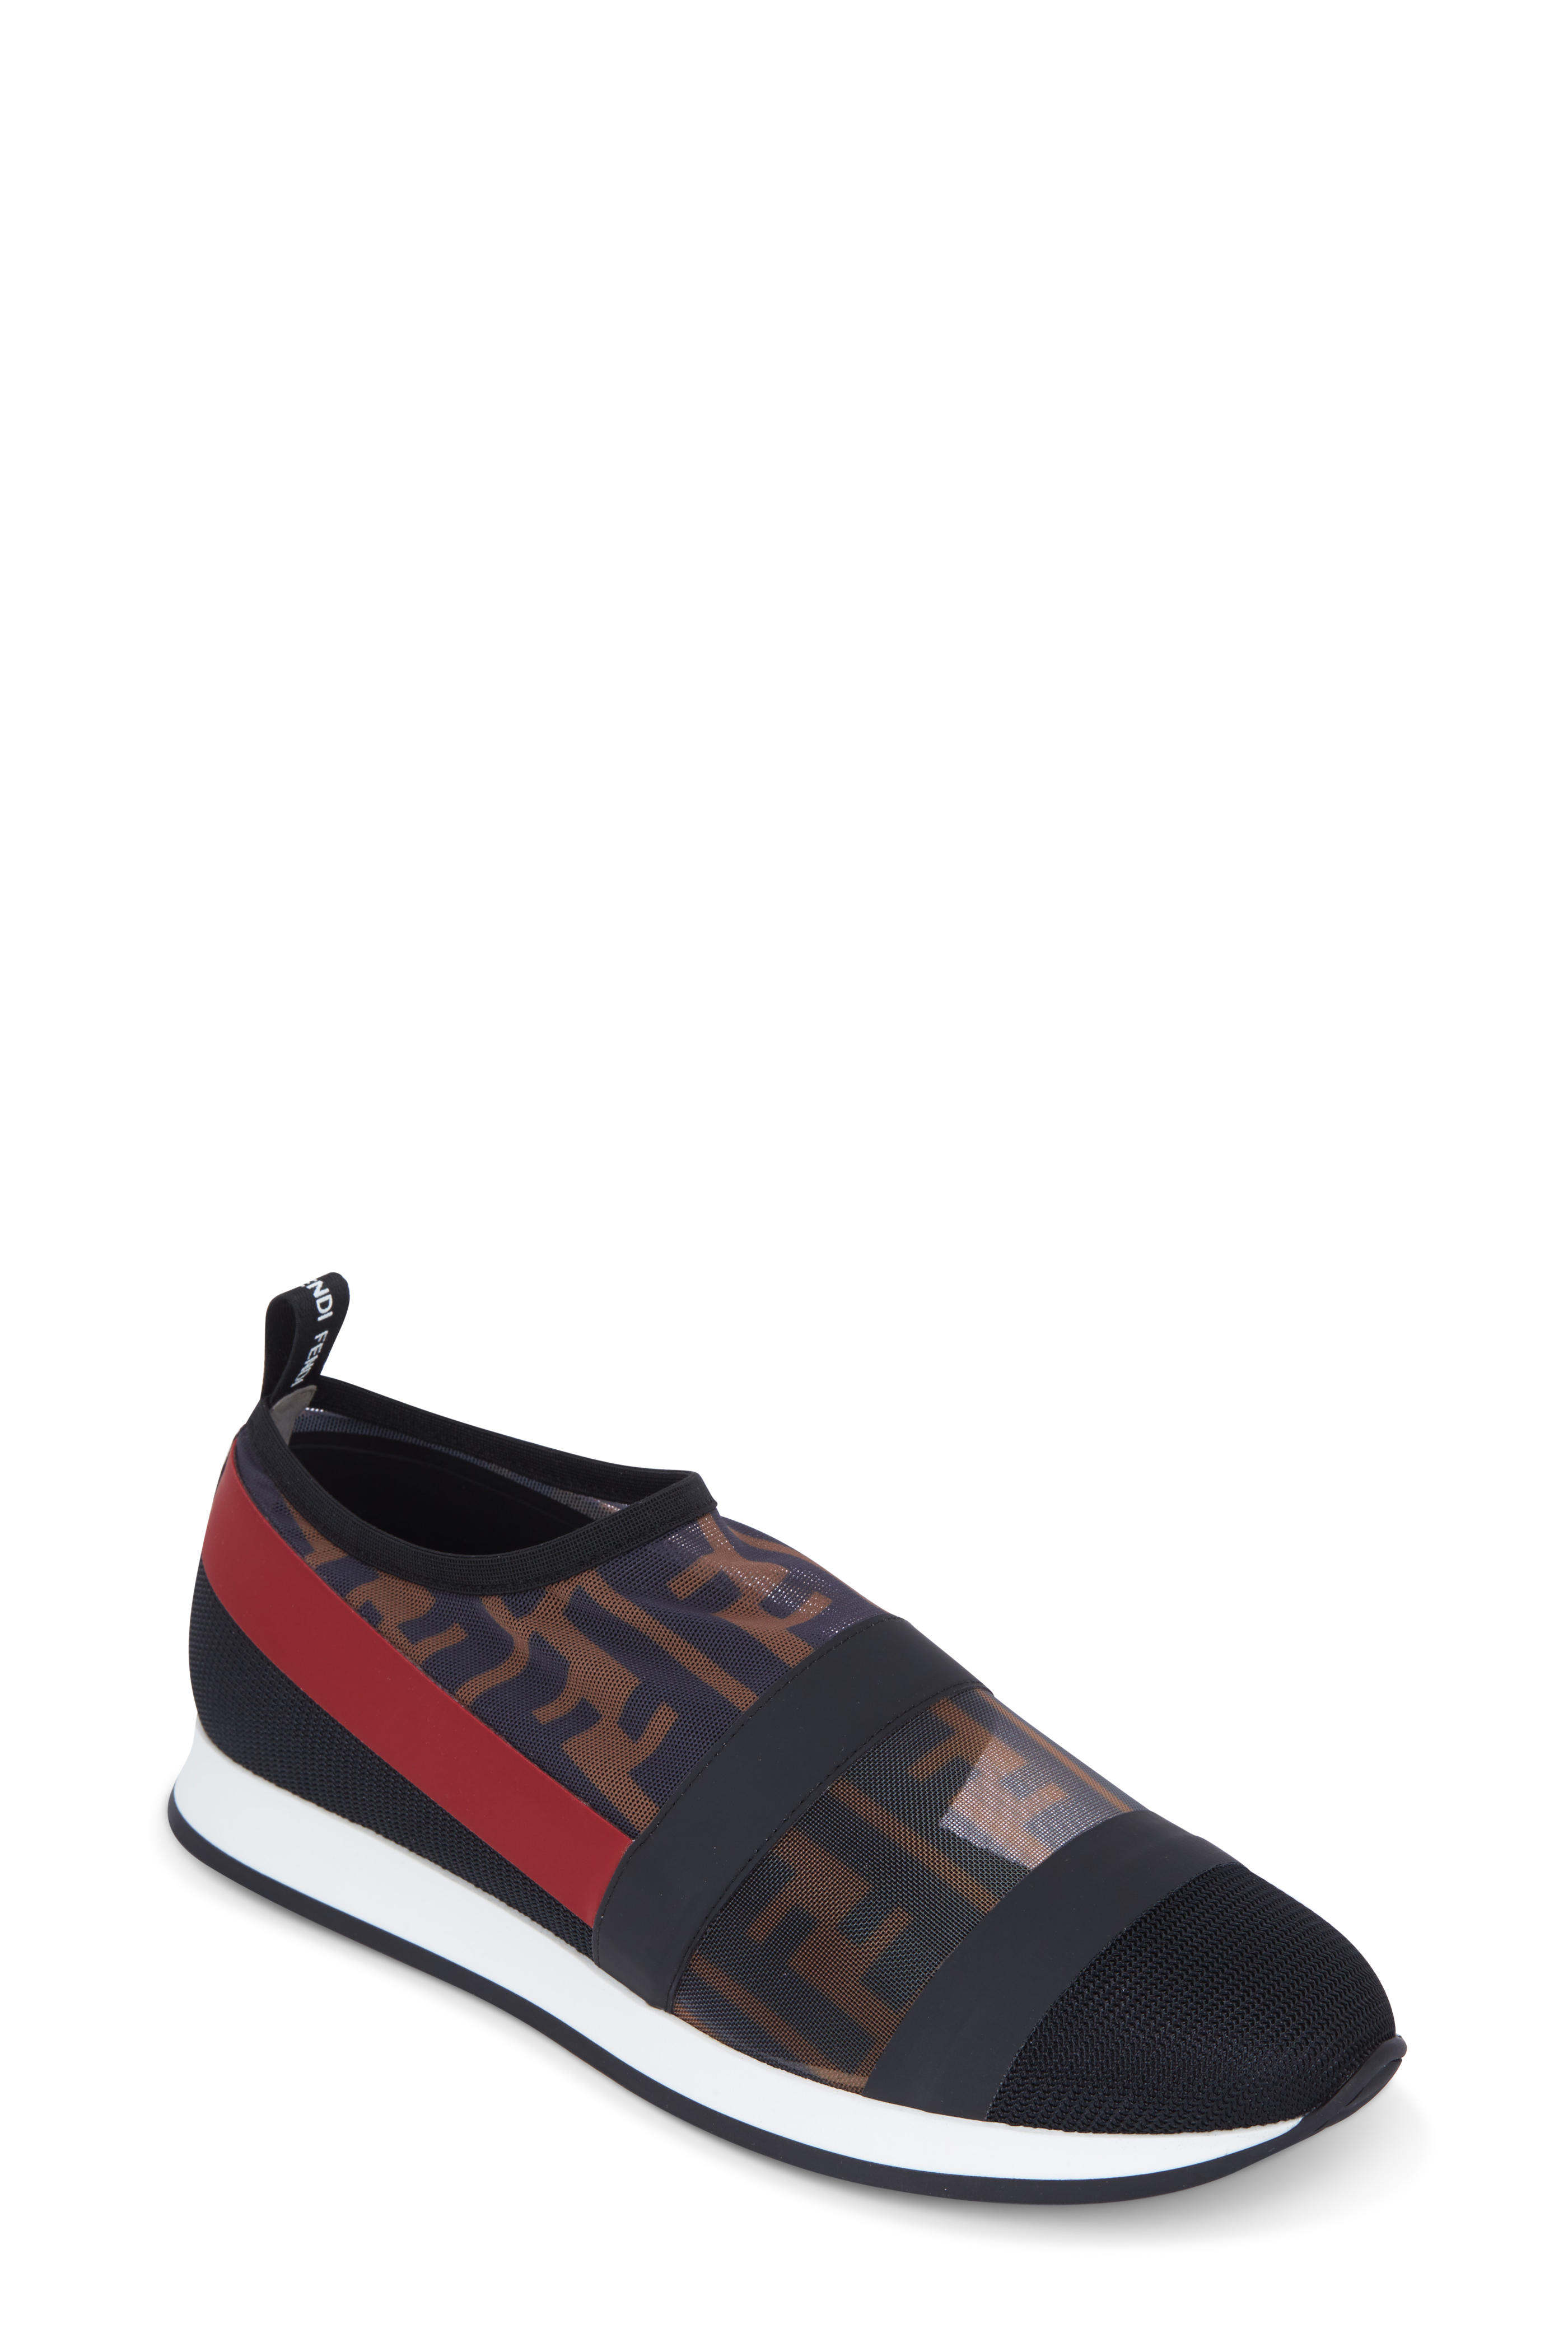 Fendi - Black Zucca Mesh Sneaker 